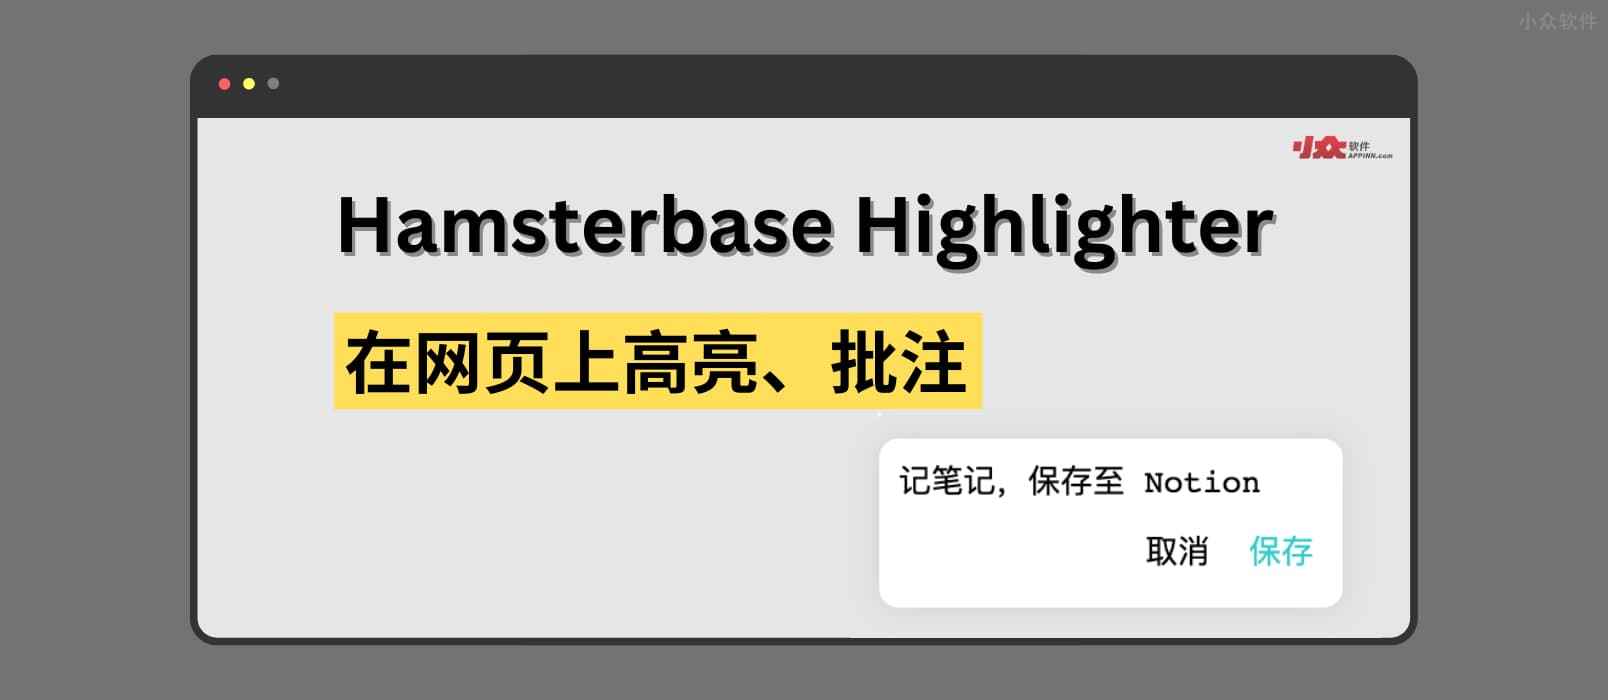 Hamsterbase Highlighter - 直接在网页上高亮标记、记笔记，保存至 Notion[Chrome/Edge]